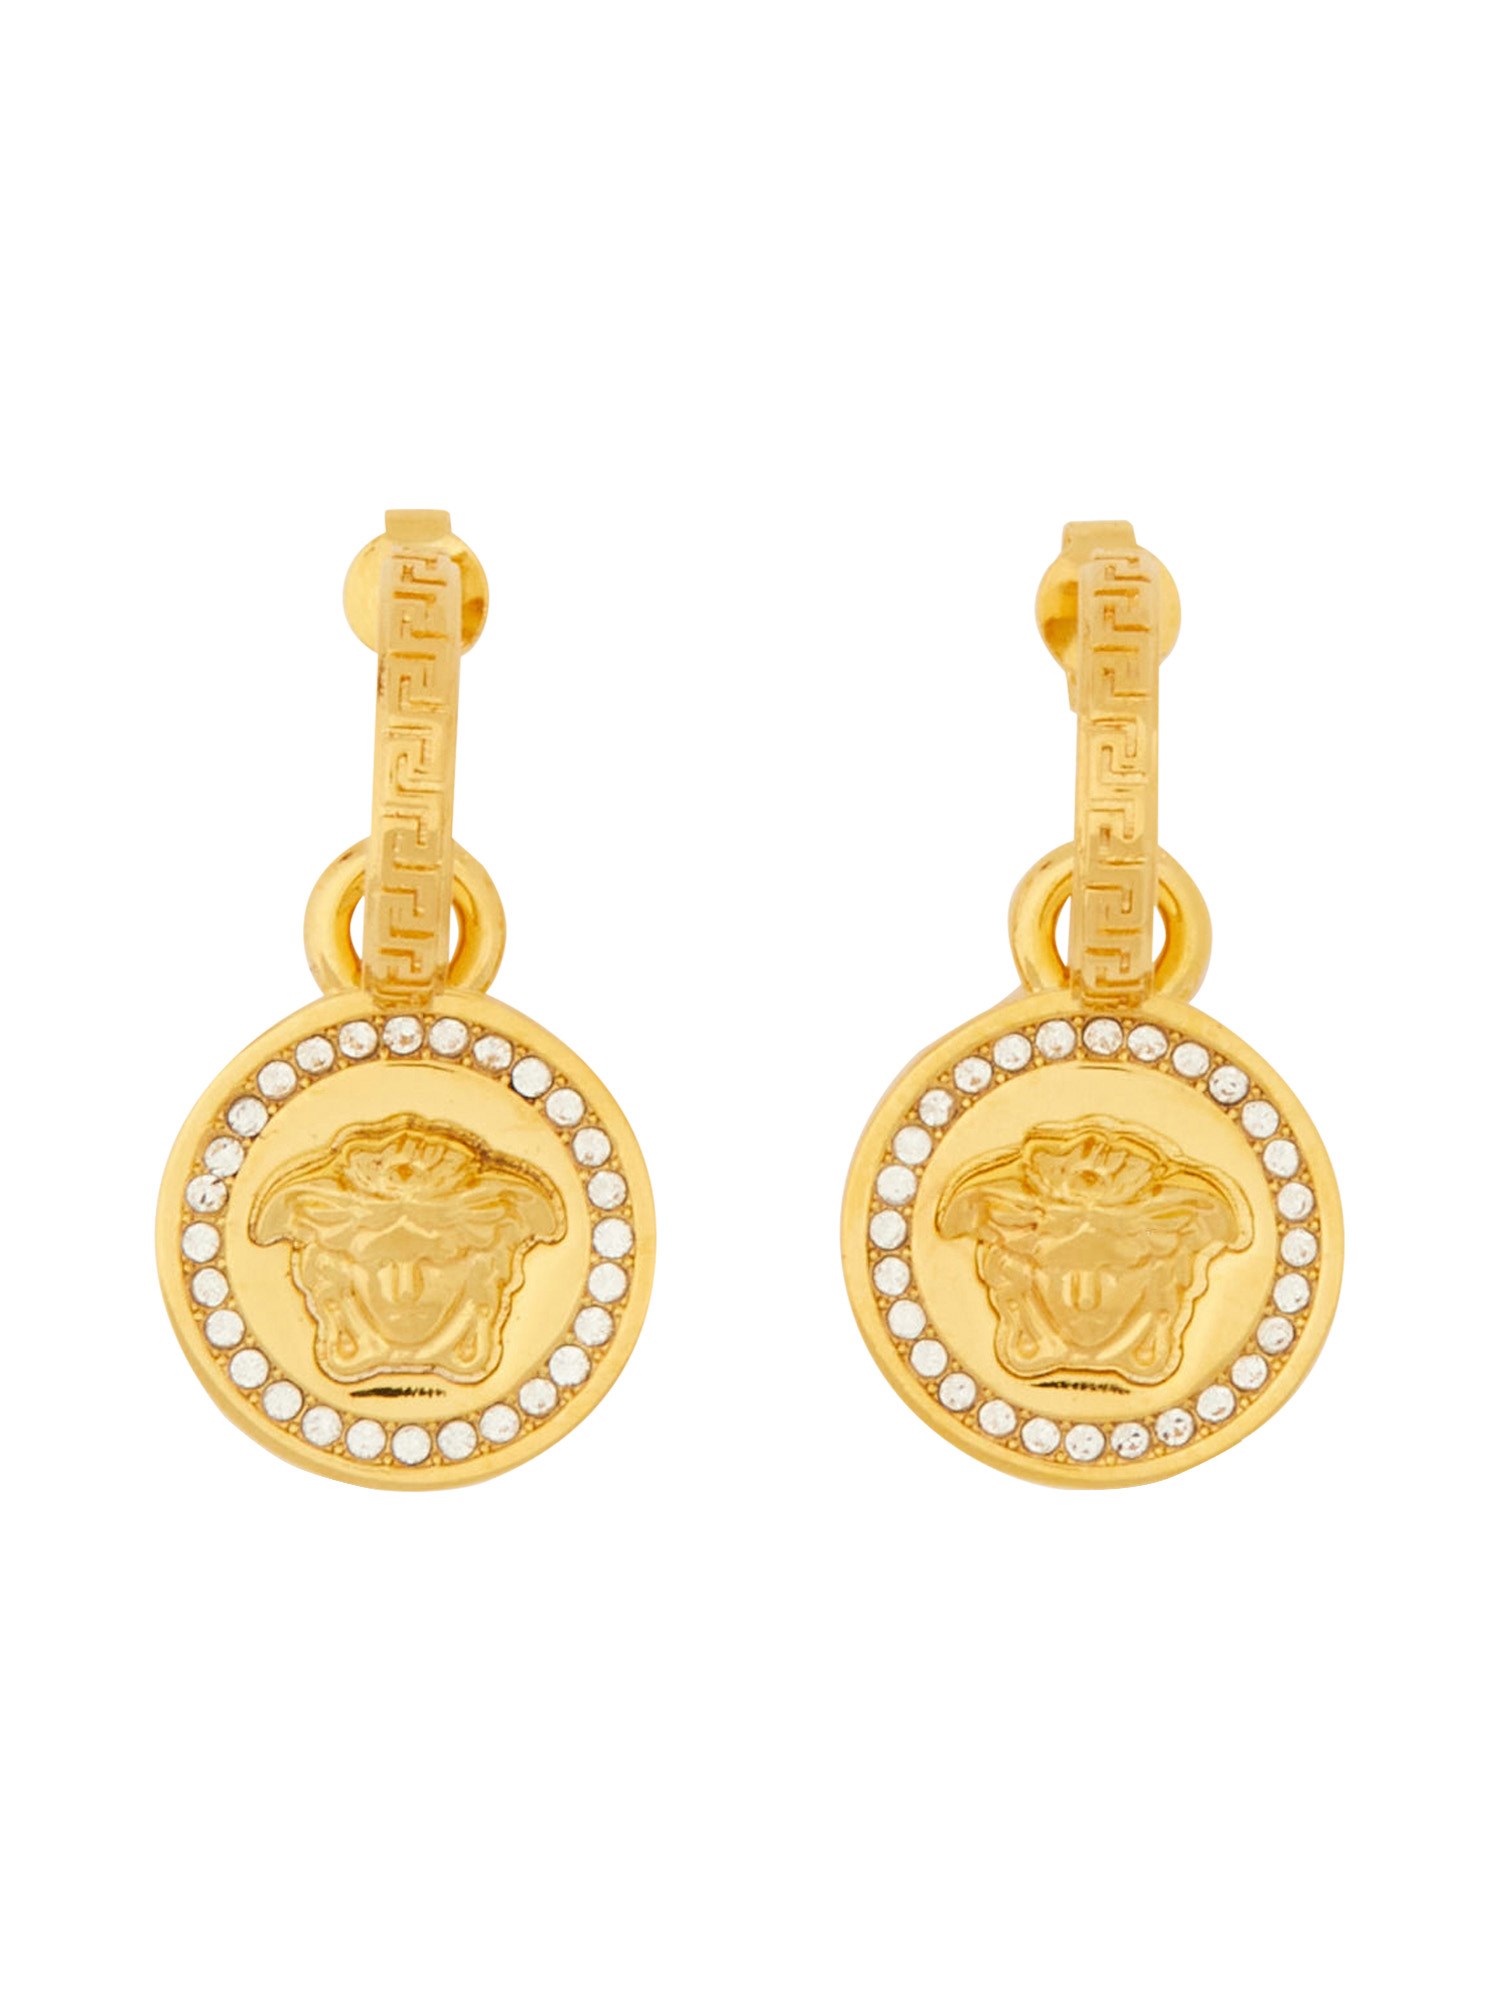 versace earrings with 